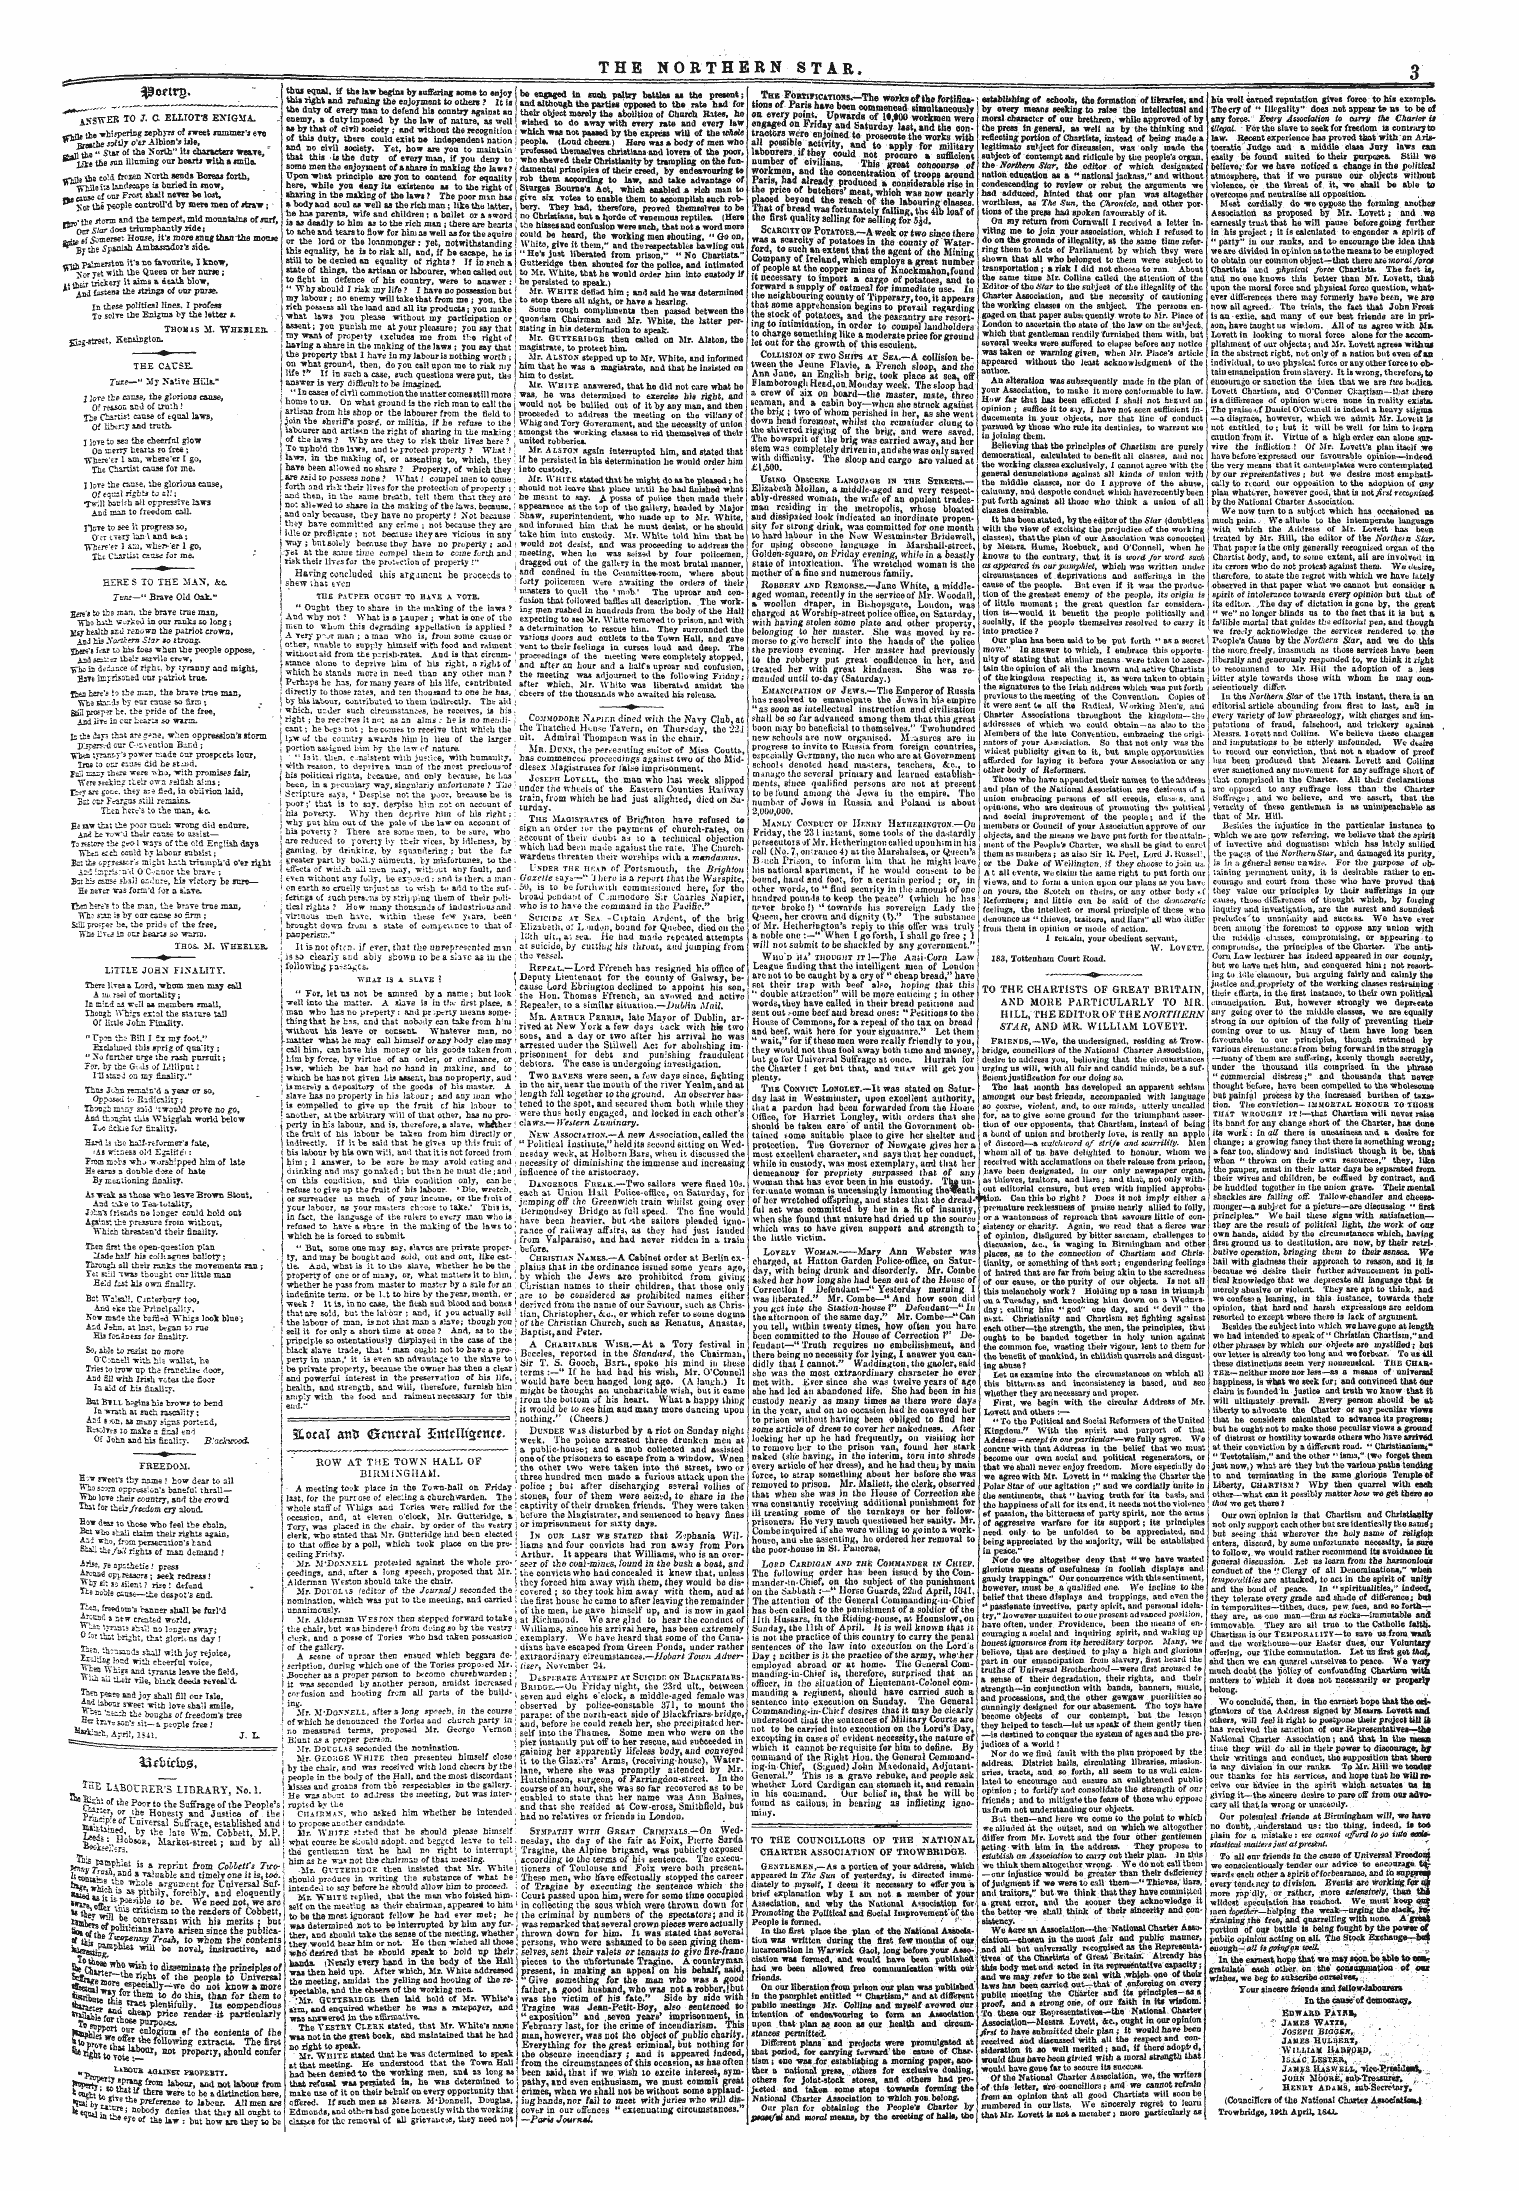 Northern Star (1837-1852): jS F Y, 3rd edition - Poeiro